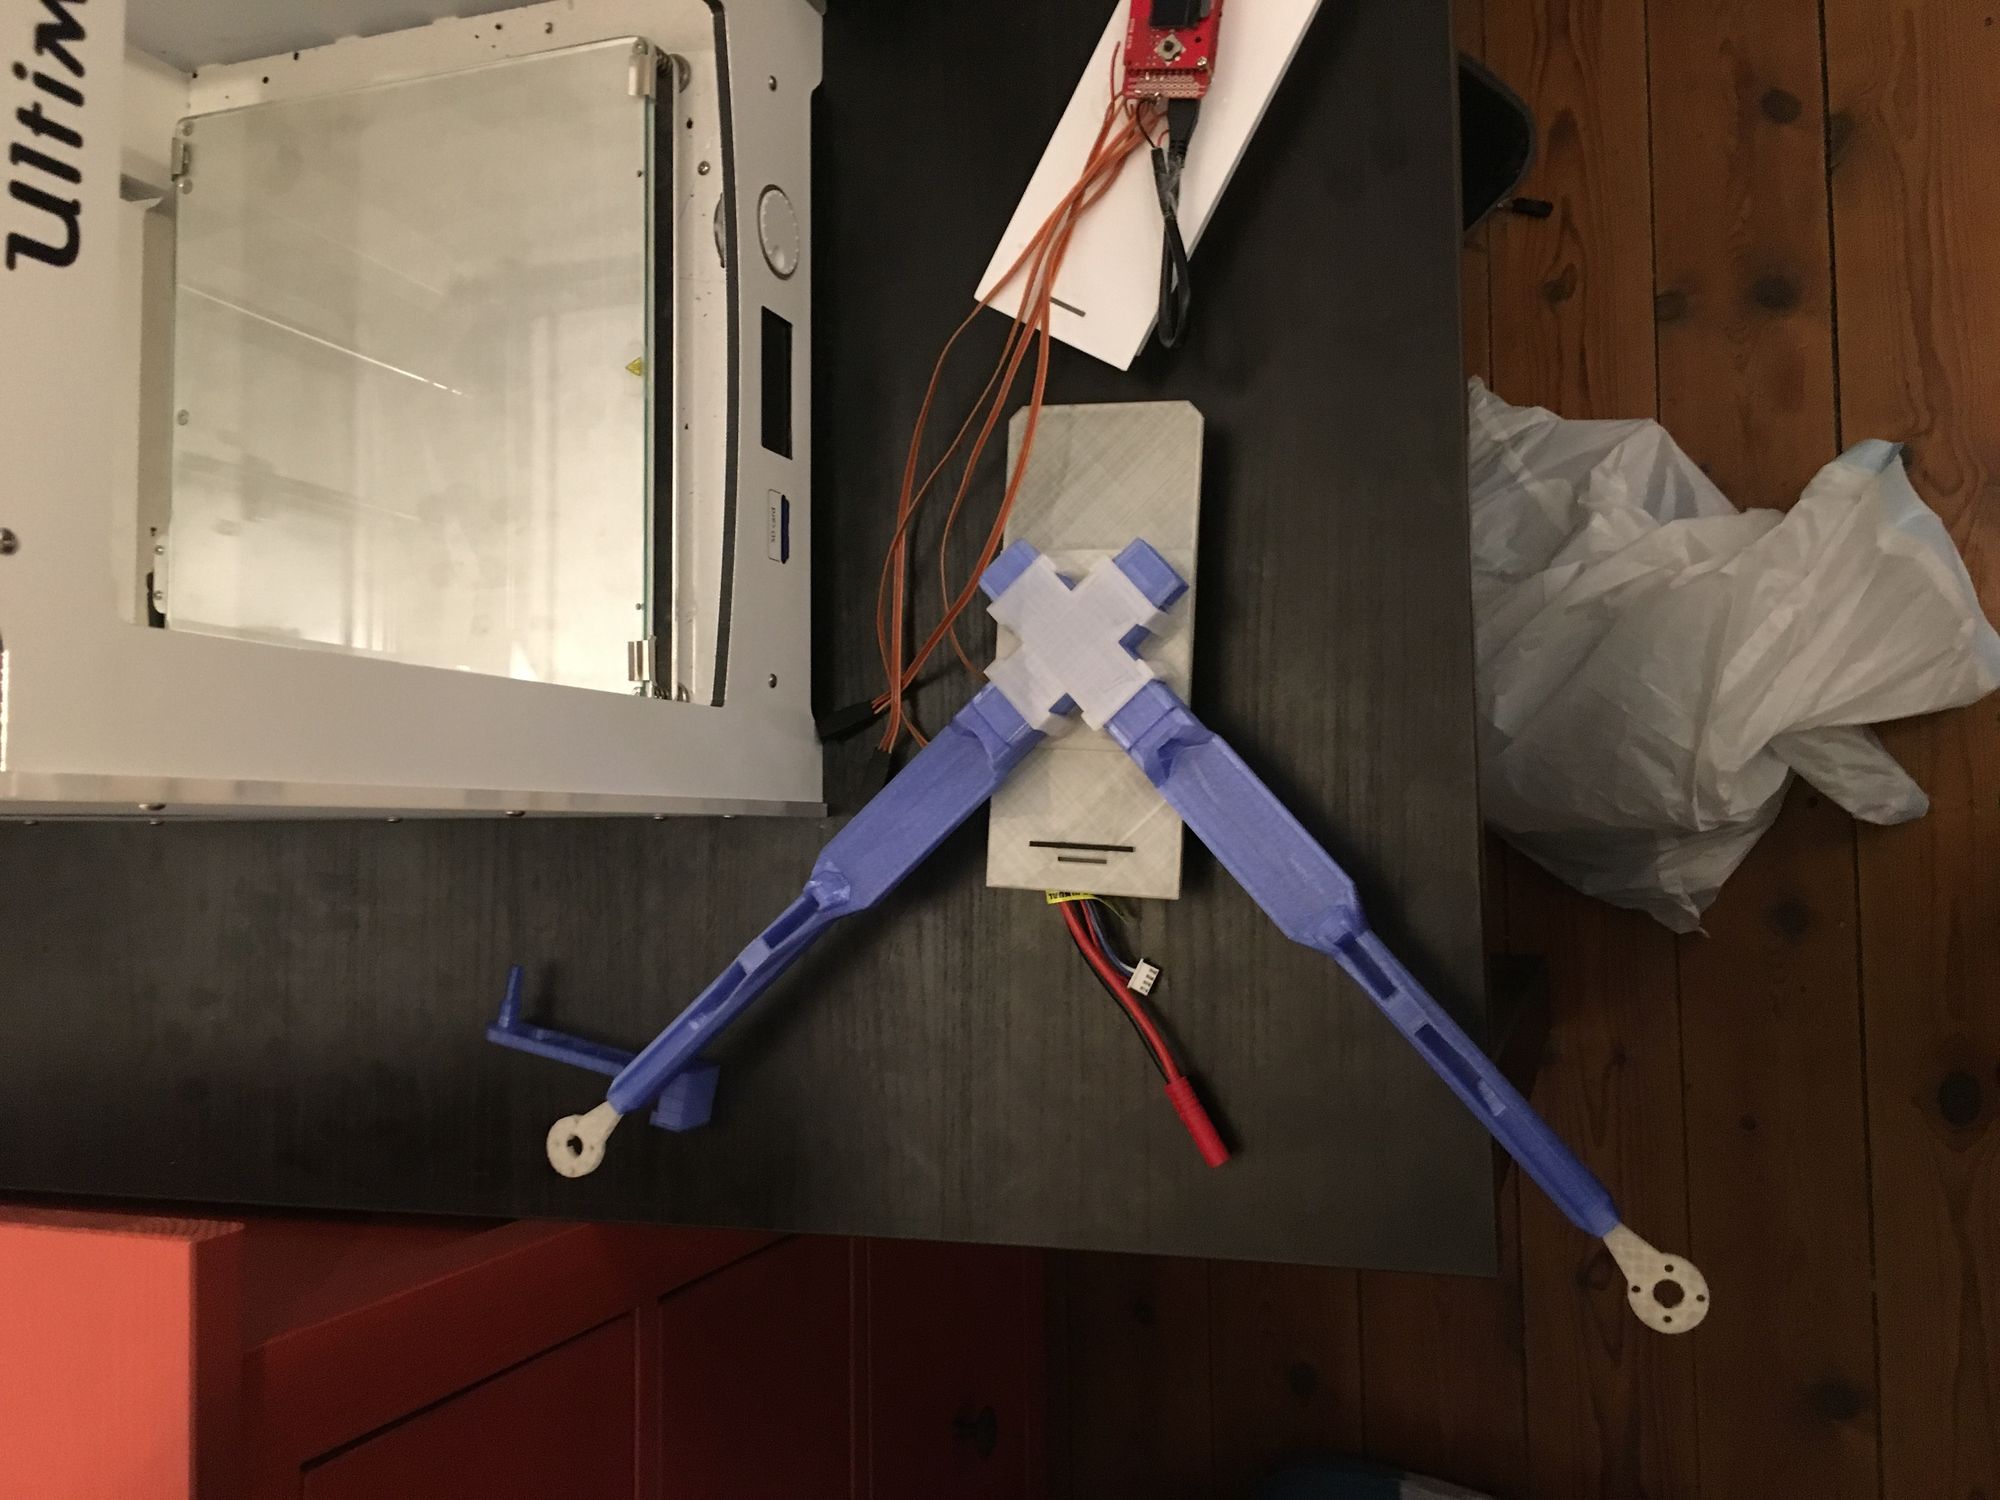 Building a Quadcopter - Part 4: Printing the frame